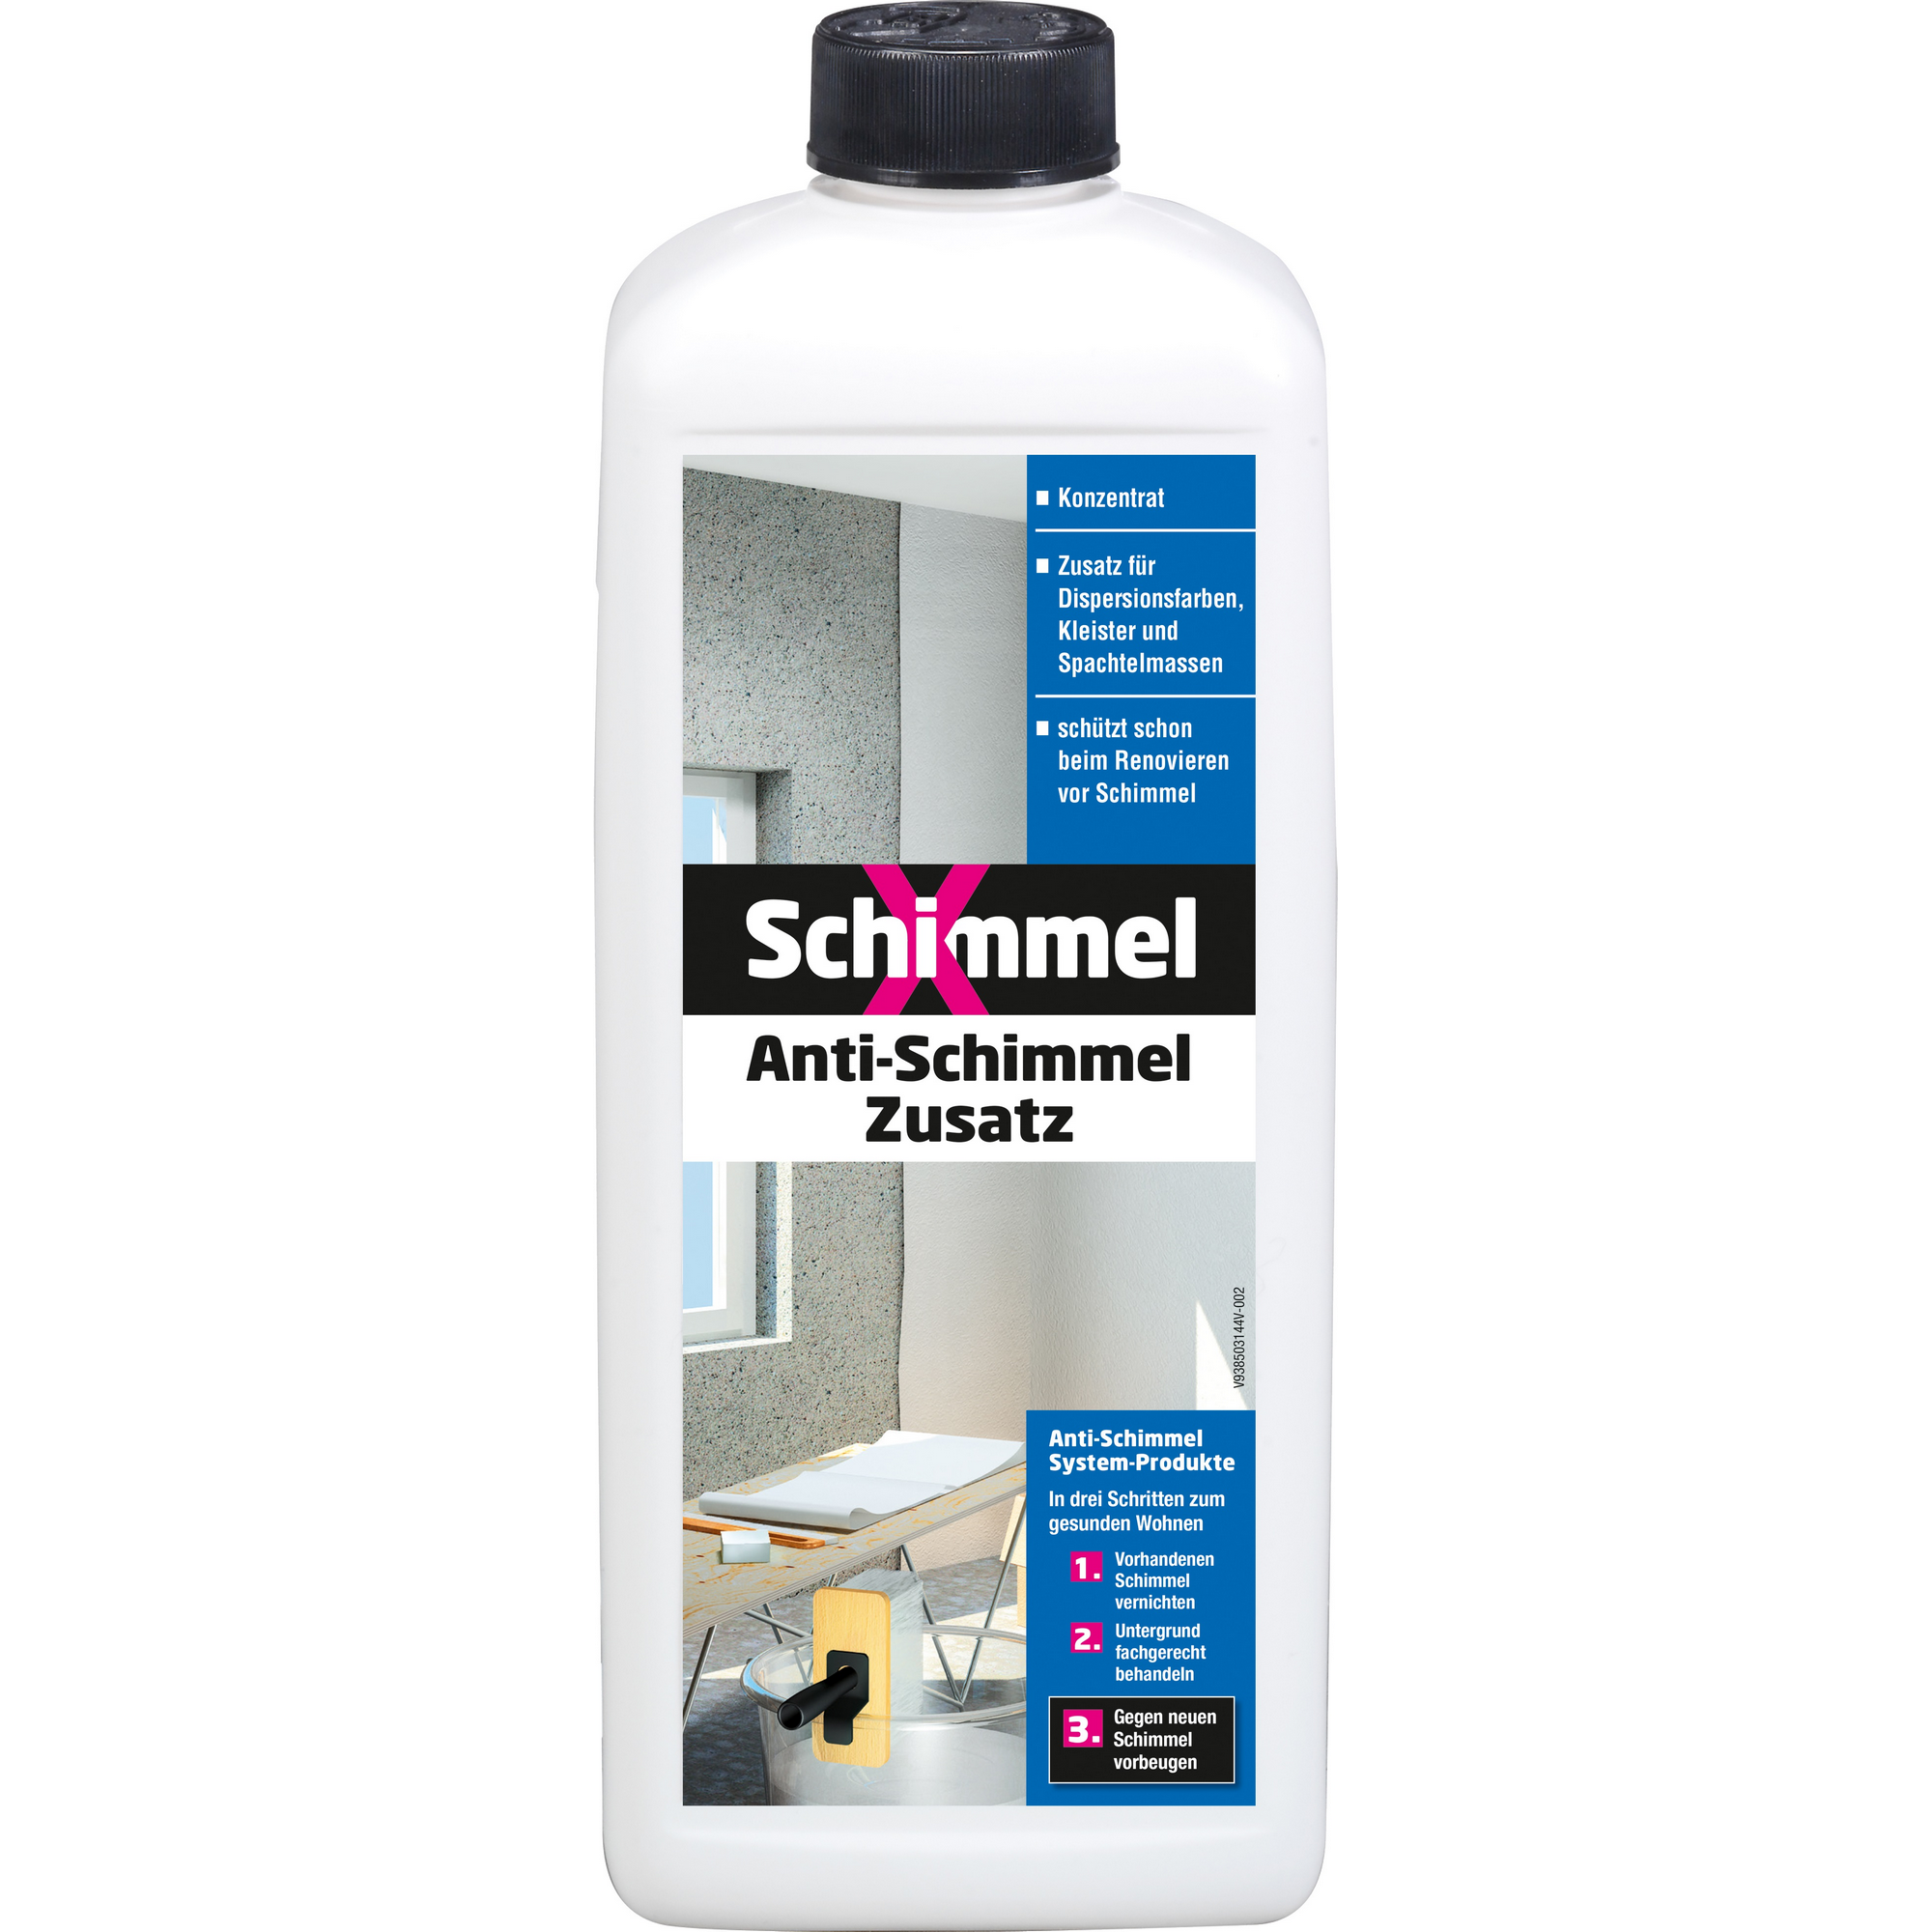 Anti-Schimmel-Zusatz 'SchimmelX' 1 l + product picture